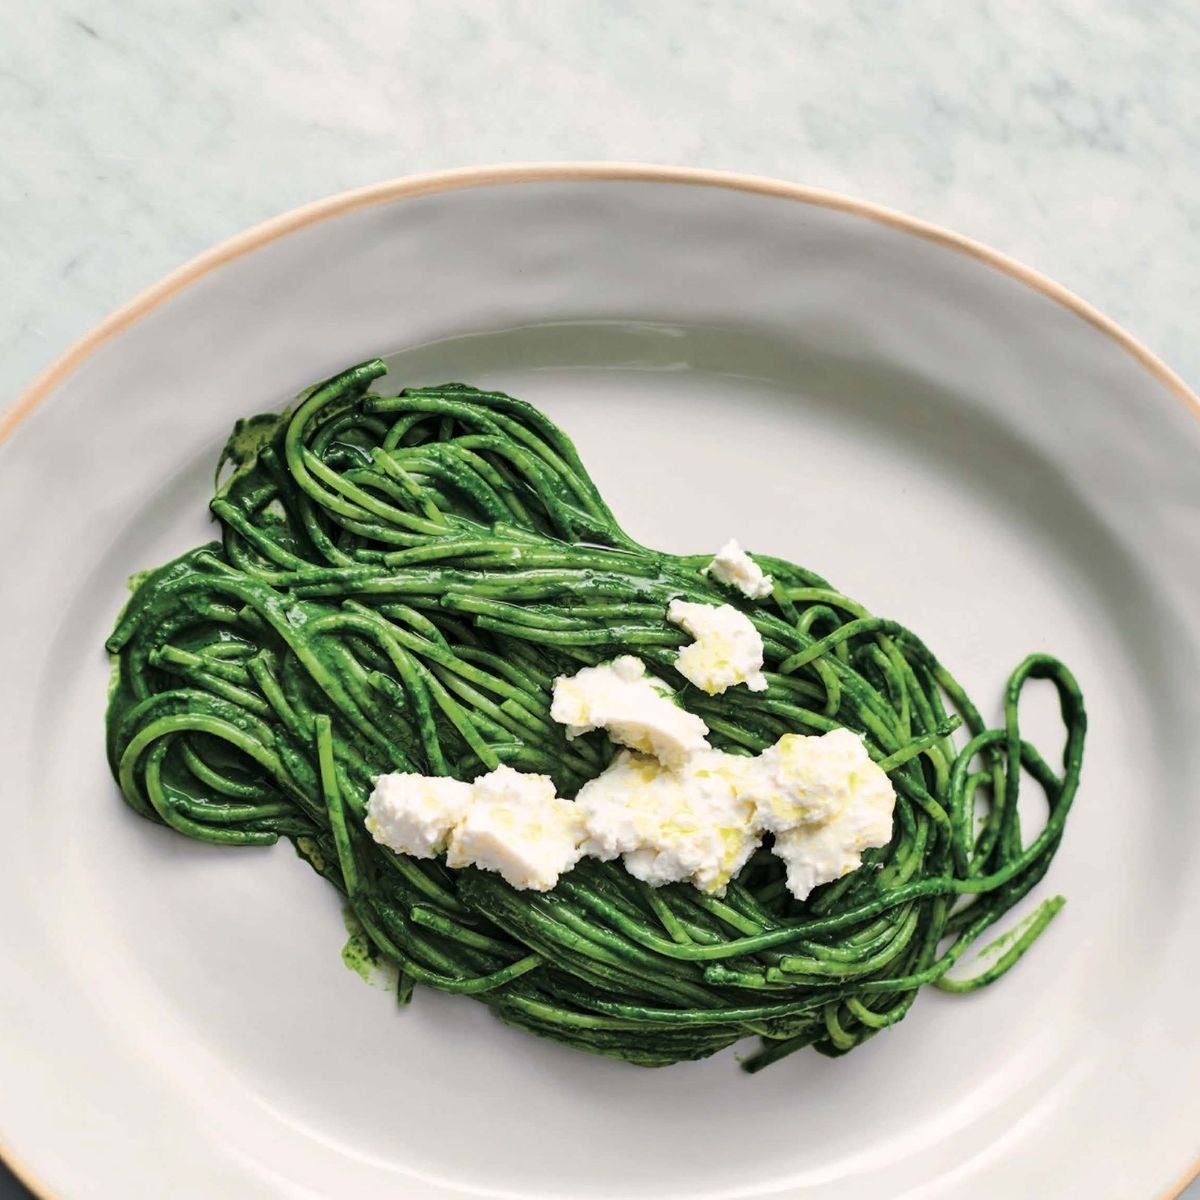 Best Jamie Oliver Green Pasta Recipe - How to Make Jamie Oliver's Super Green  Spaghetti